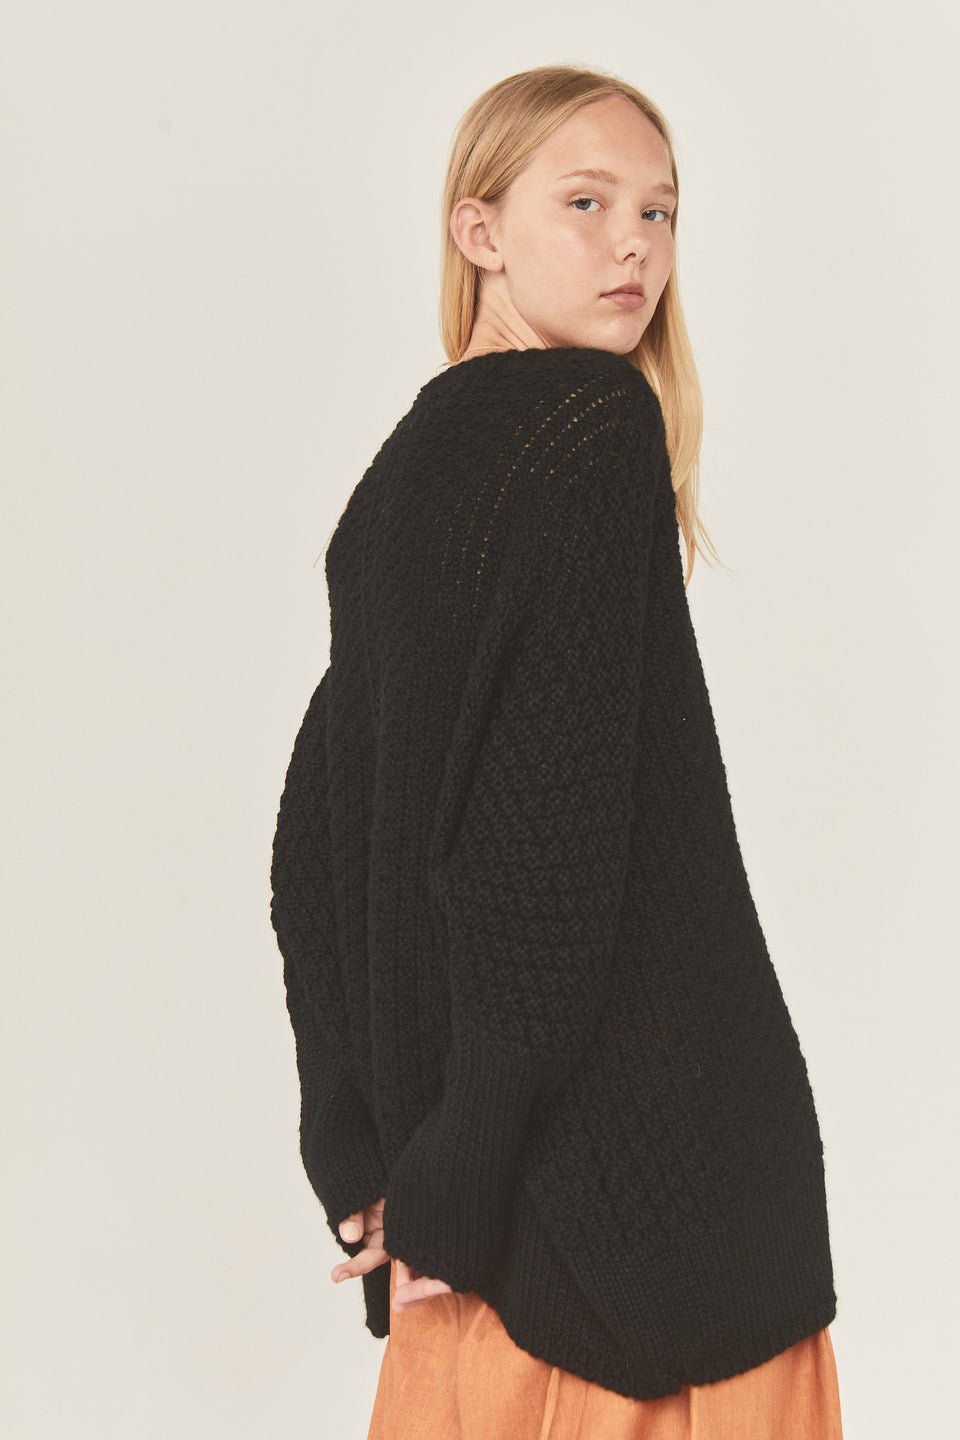 Sweater Abombado